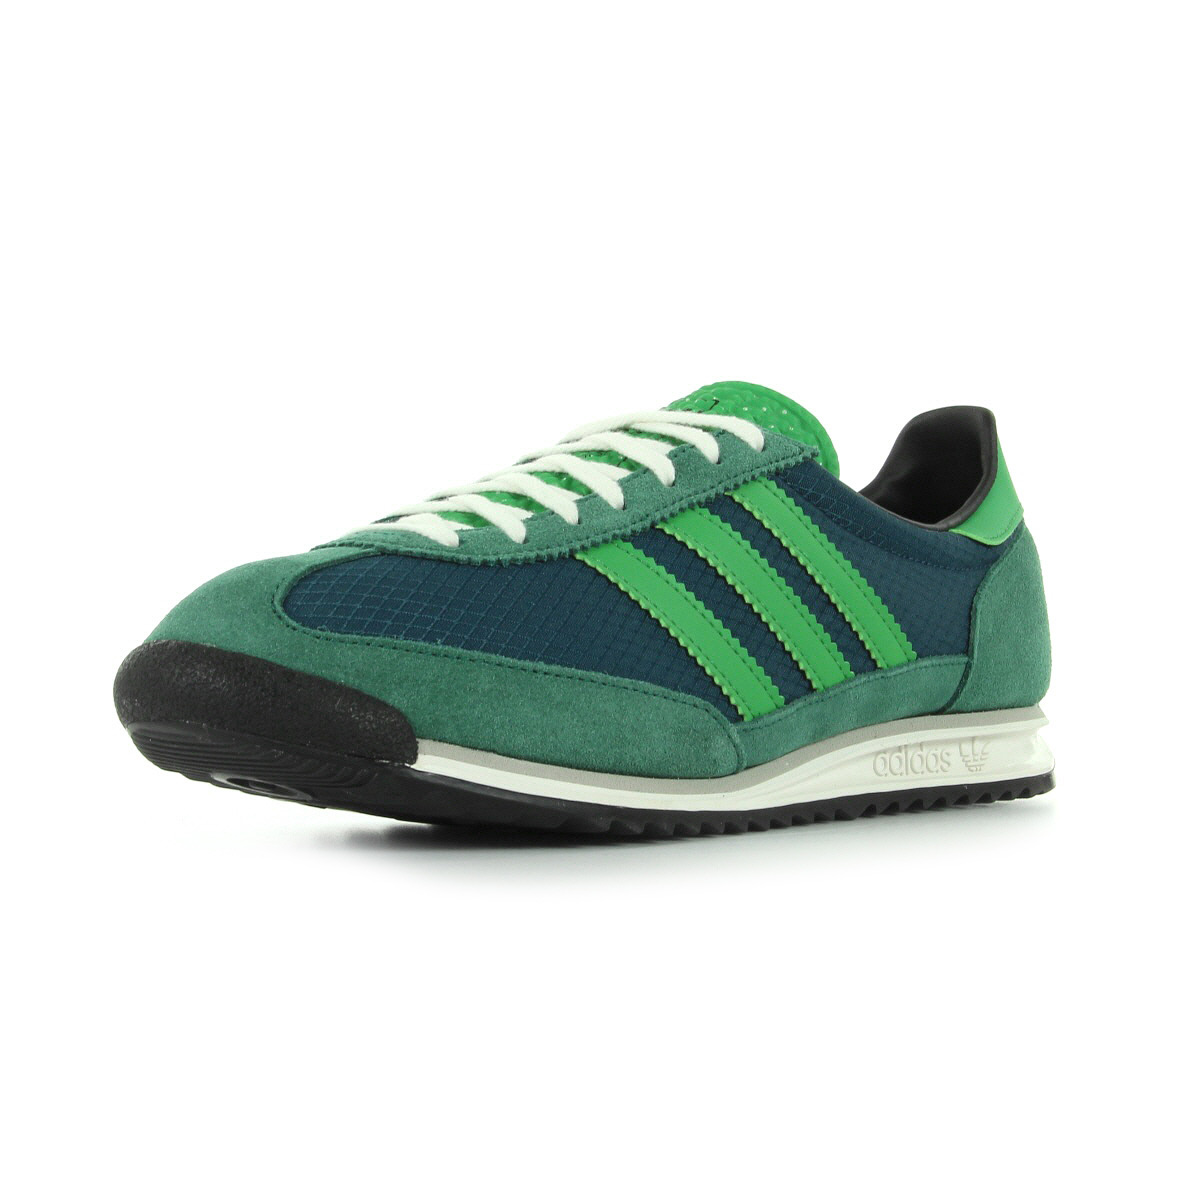 Chaussures baskets Adidas Homme Sl 72 taille Vert Verte Toile Lacets | eBay